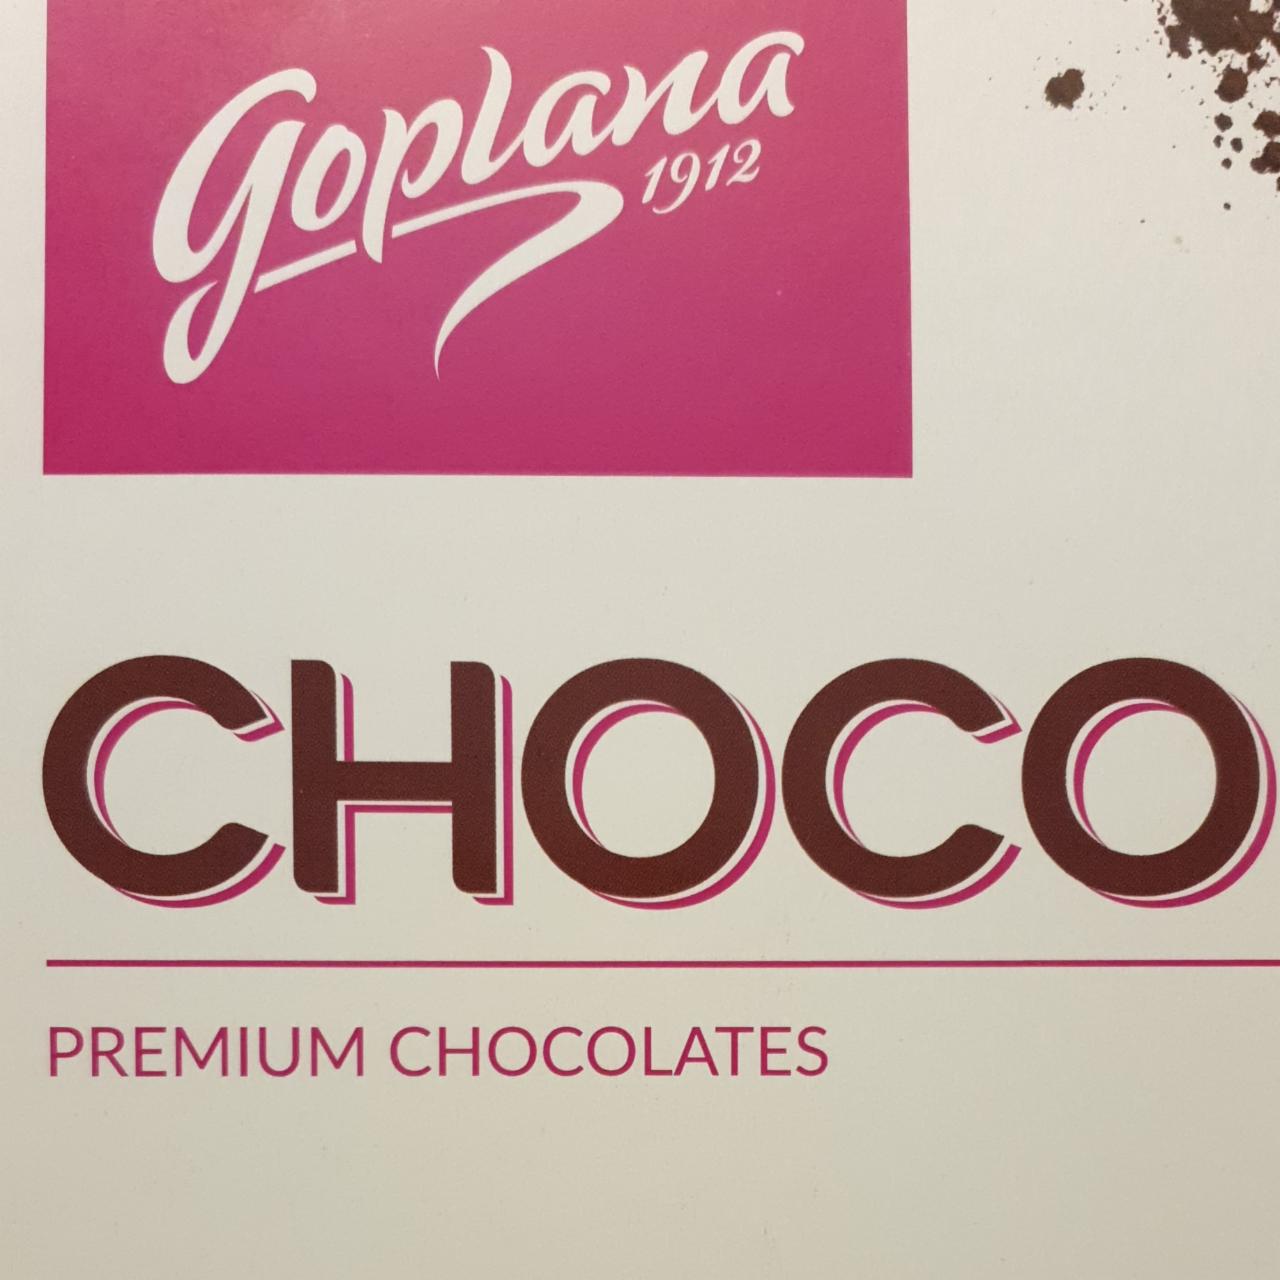 Fotografie - Choco Premium chocolates Goplana